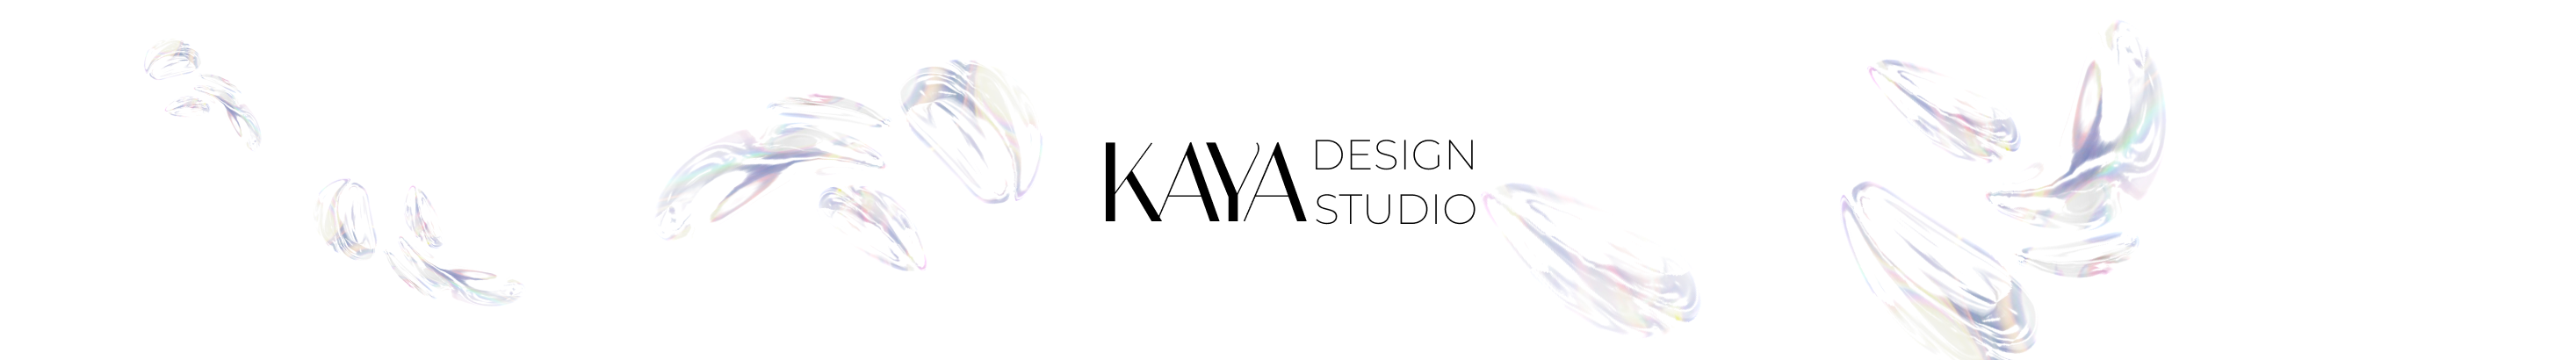 KAYA designstudio's profile banner